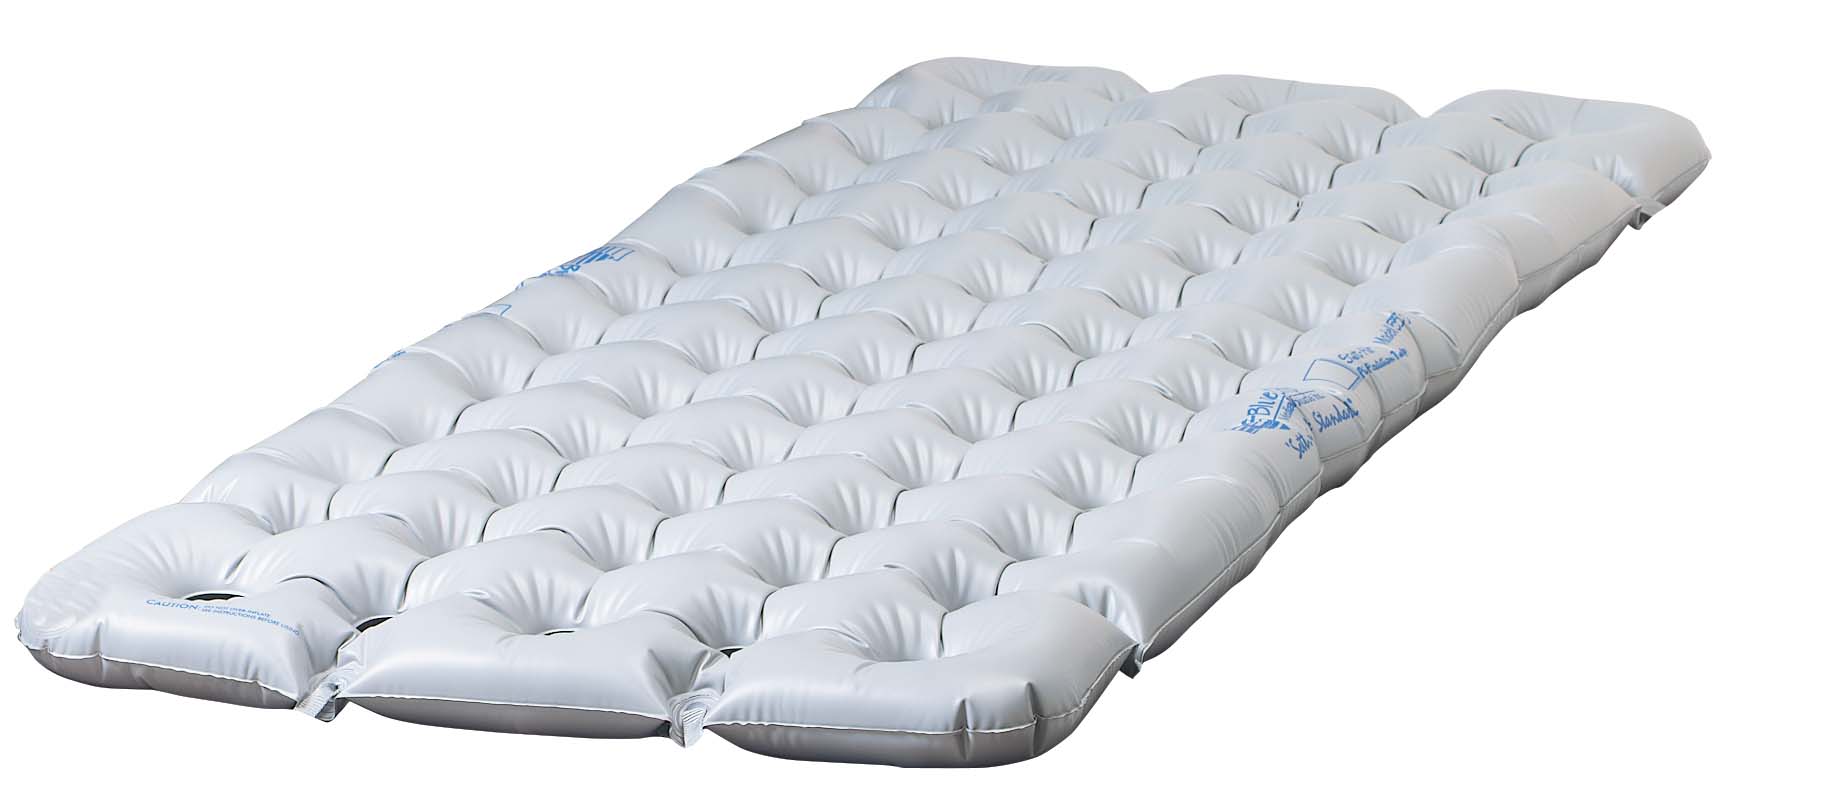 static air mattress overlay